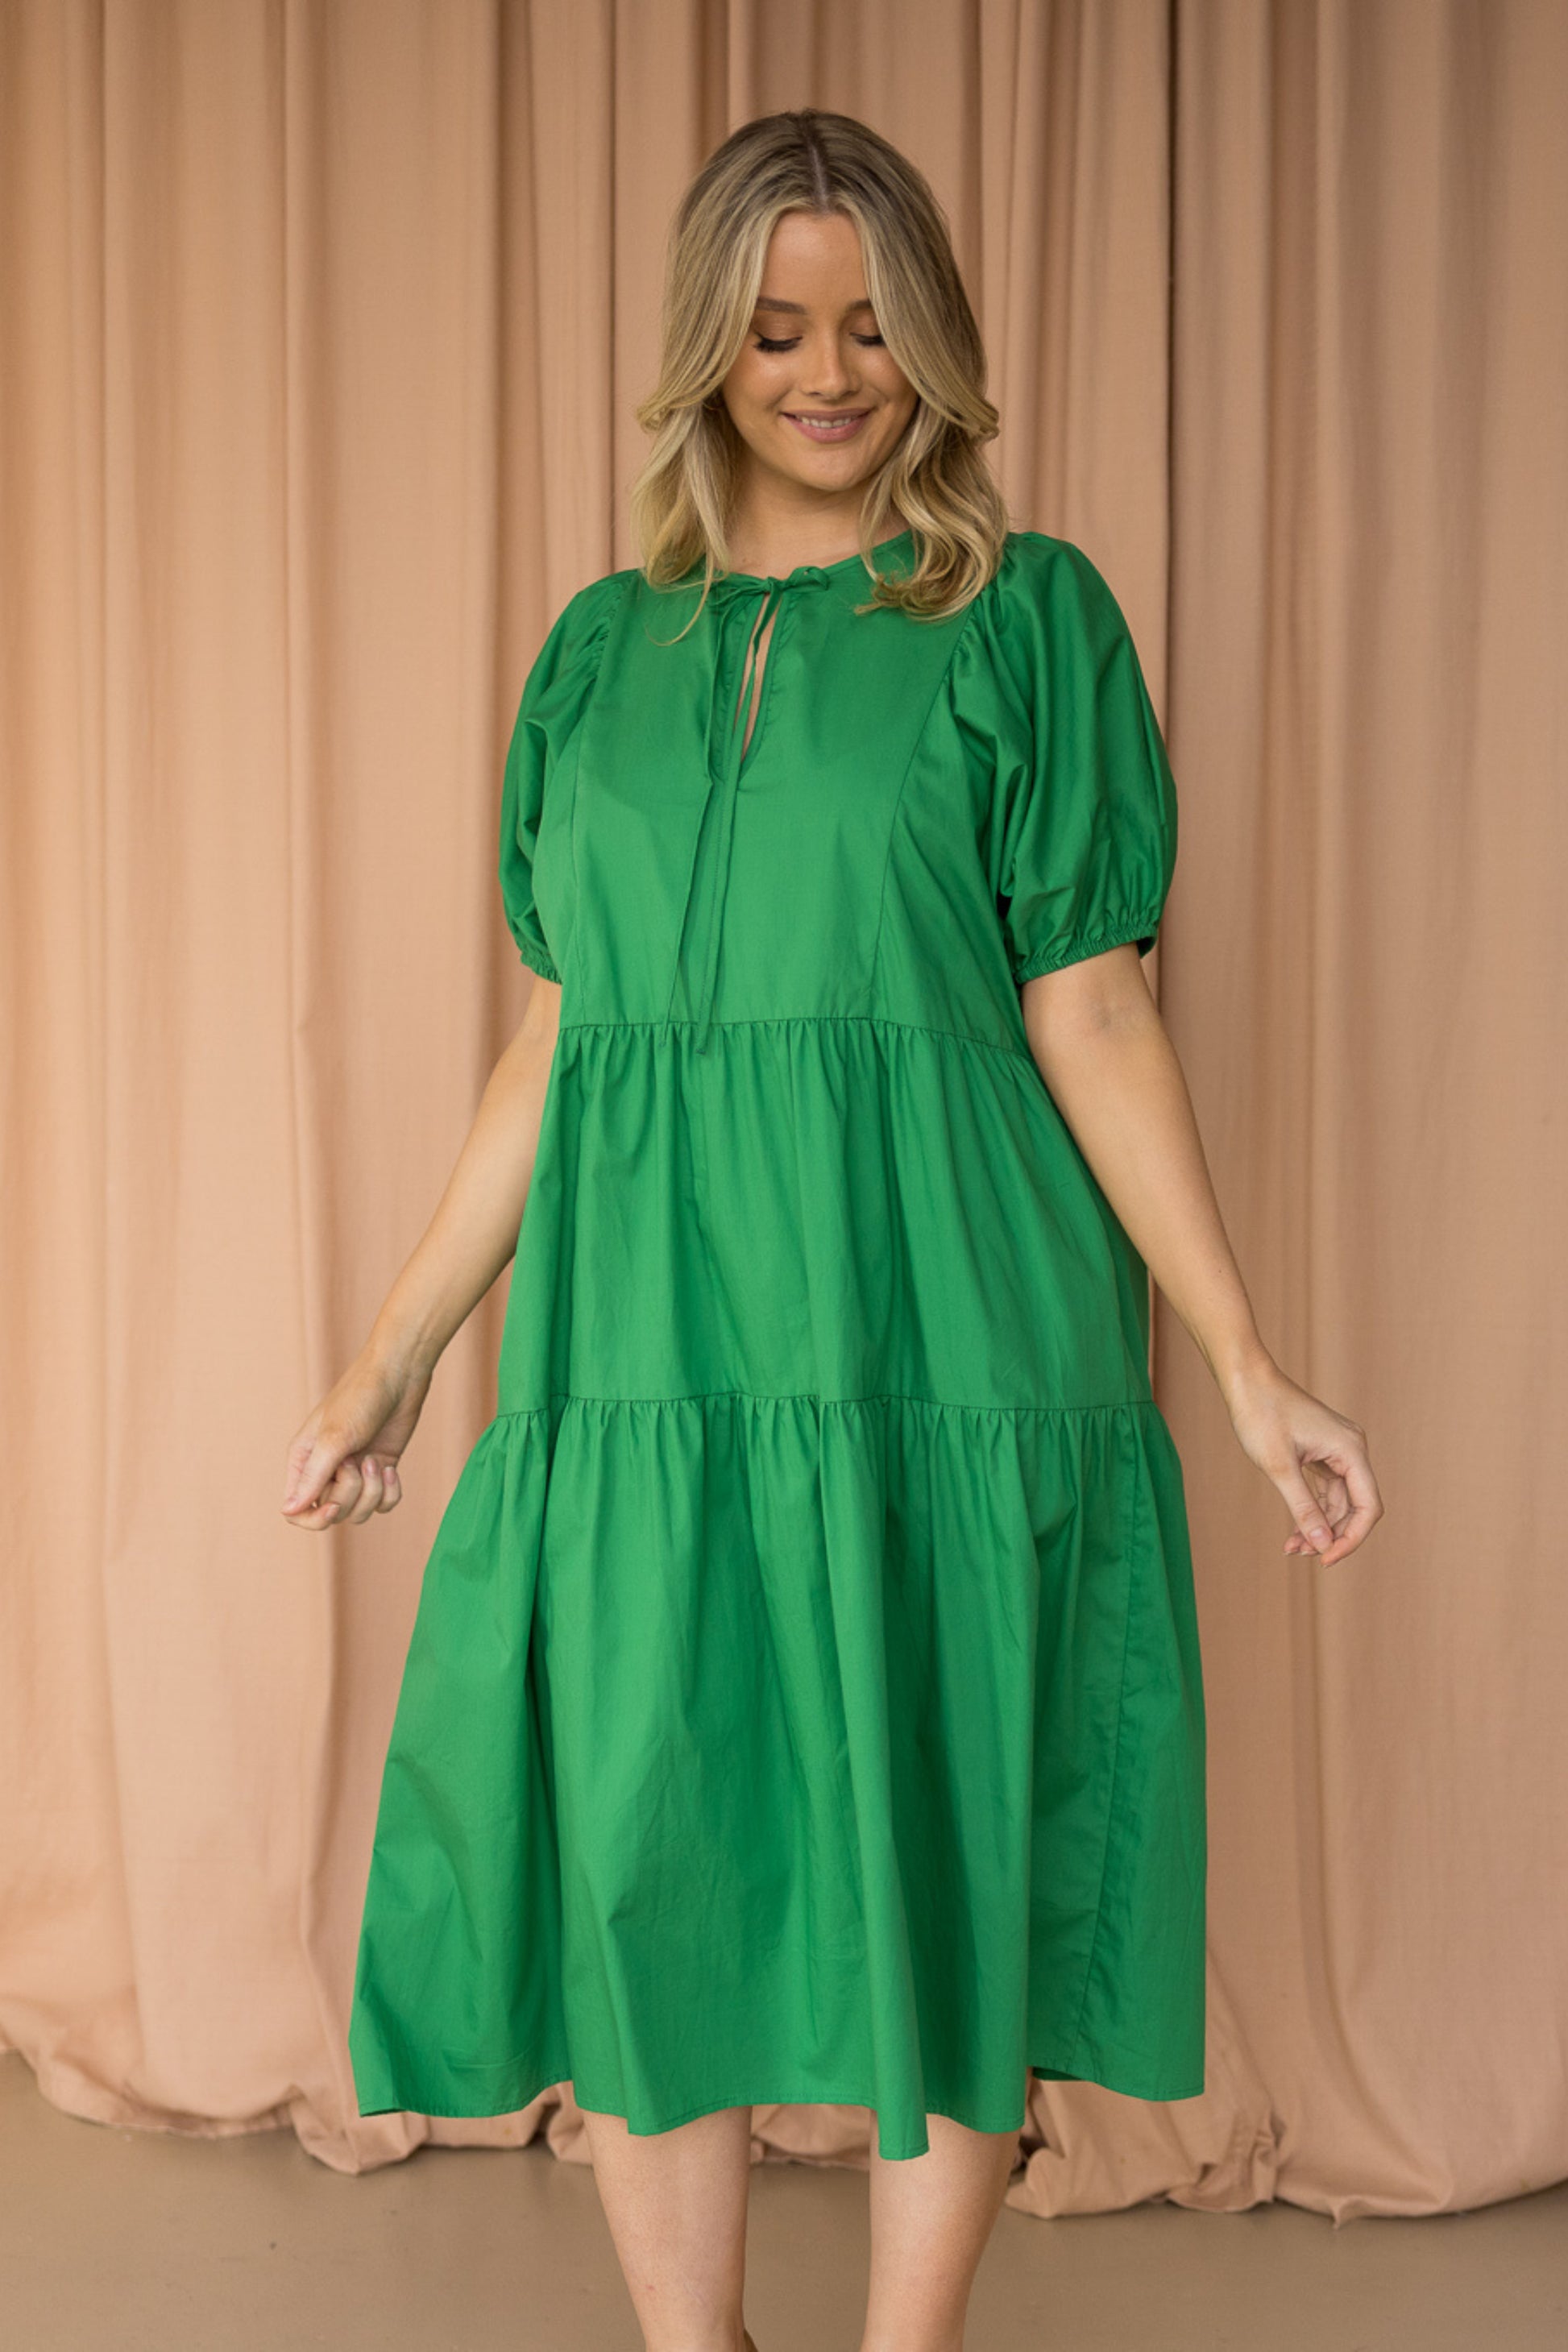 Drifter Midi Dress in Emerald